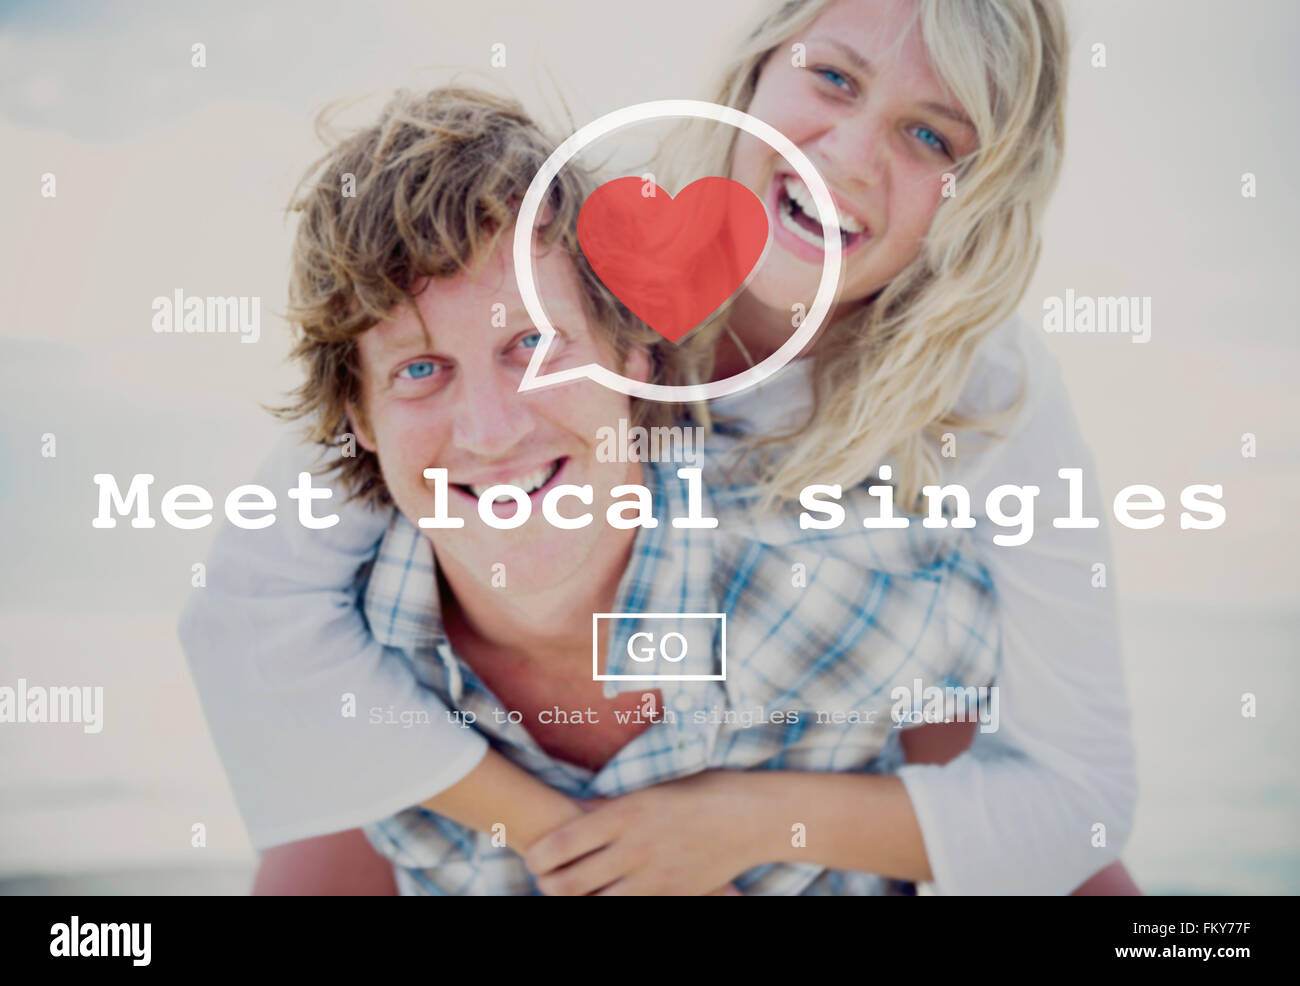 To local singles meet where Meet Locals